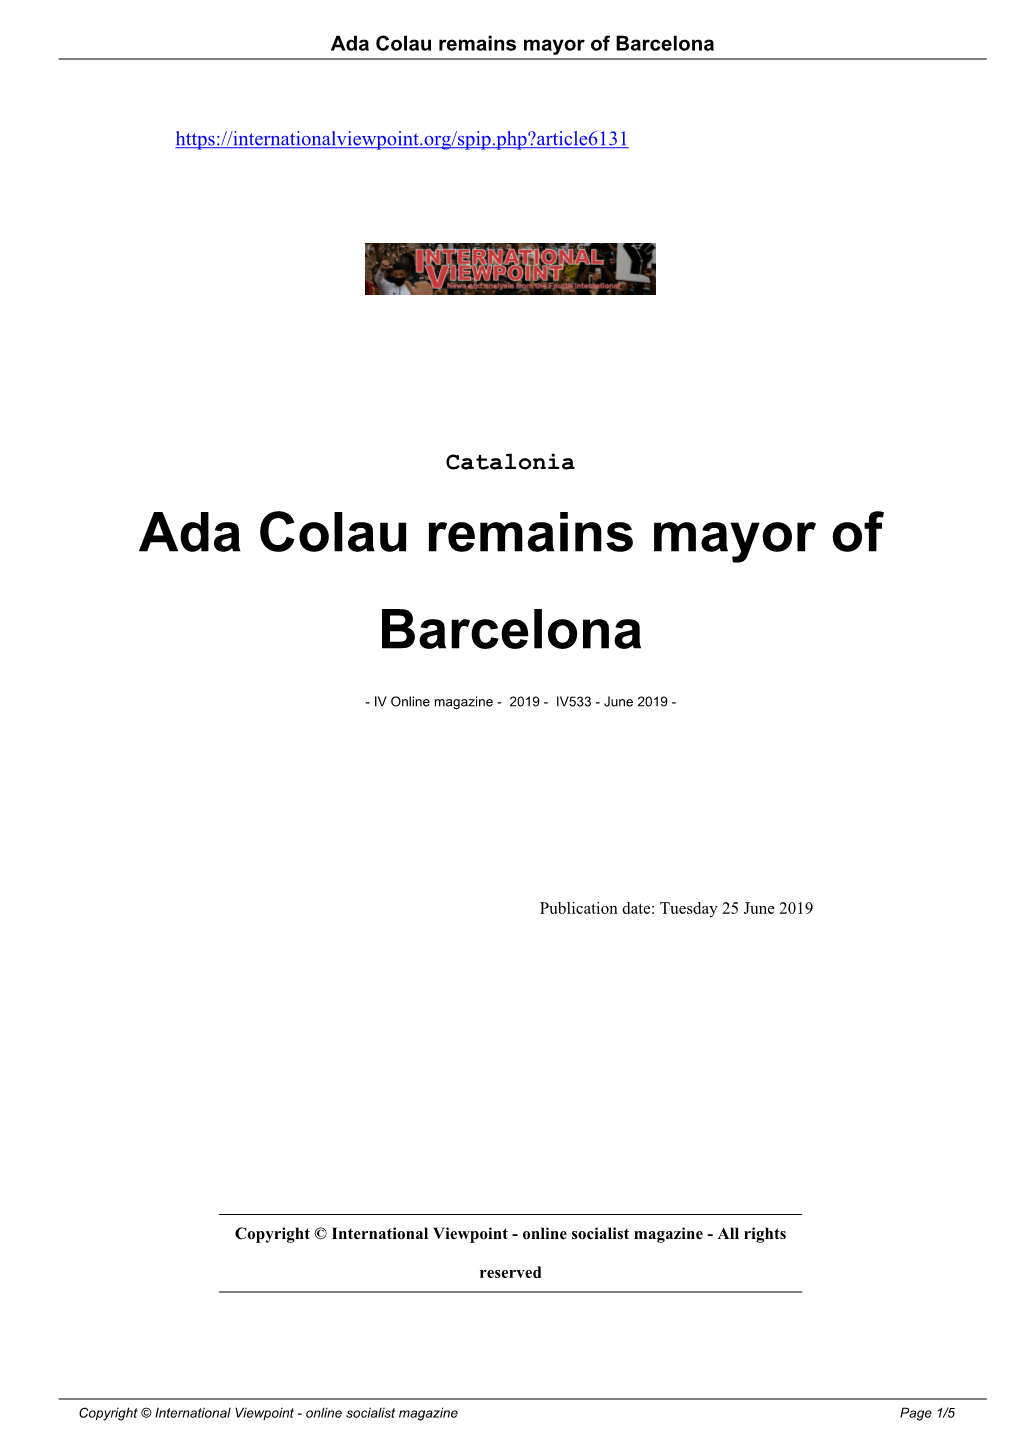 Ada Colau Remains Mayor of Barcelona